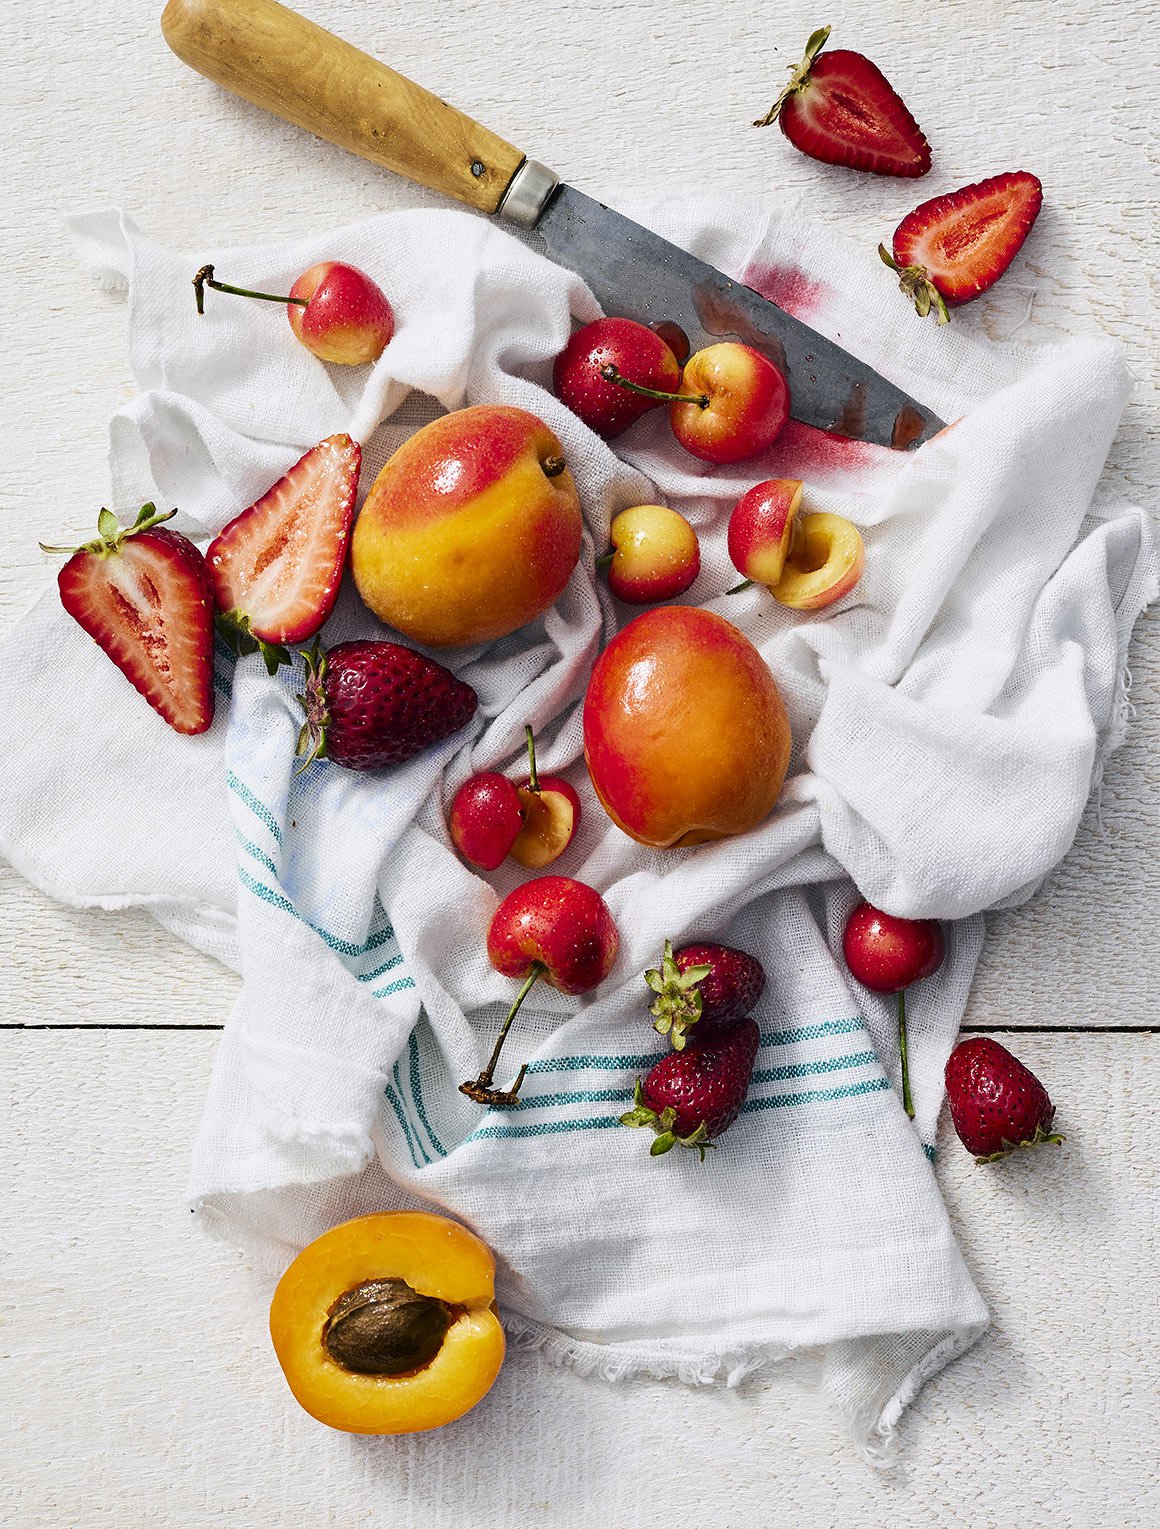 stone-fruit-cherry-plum-straberry-fresh-produce.jpg